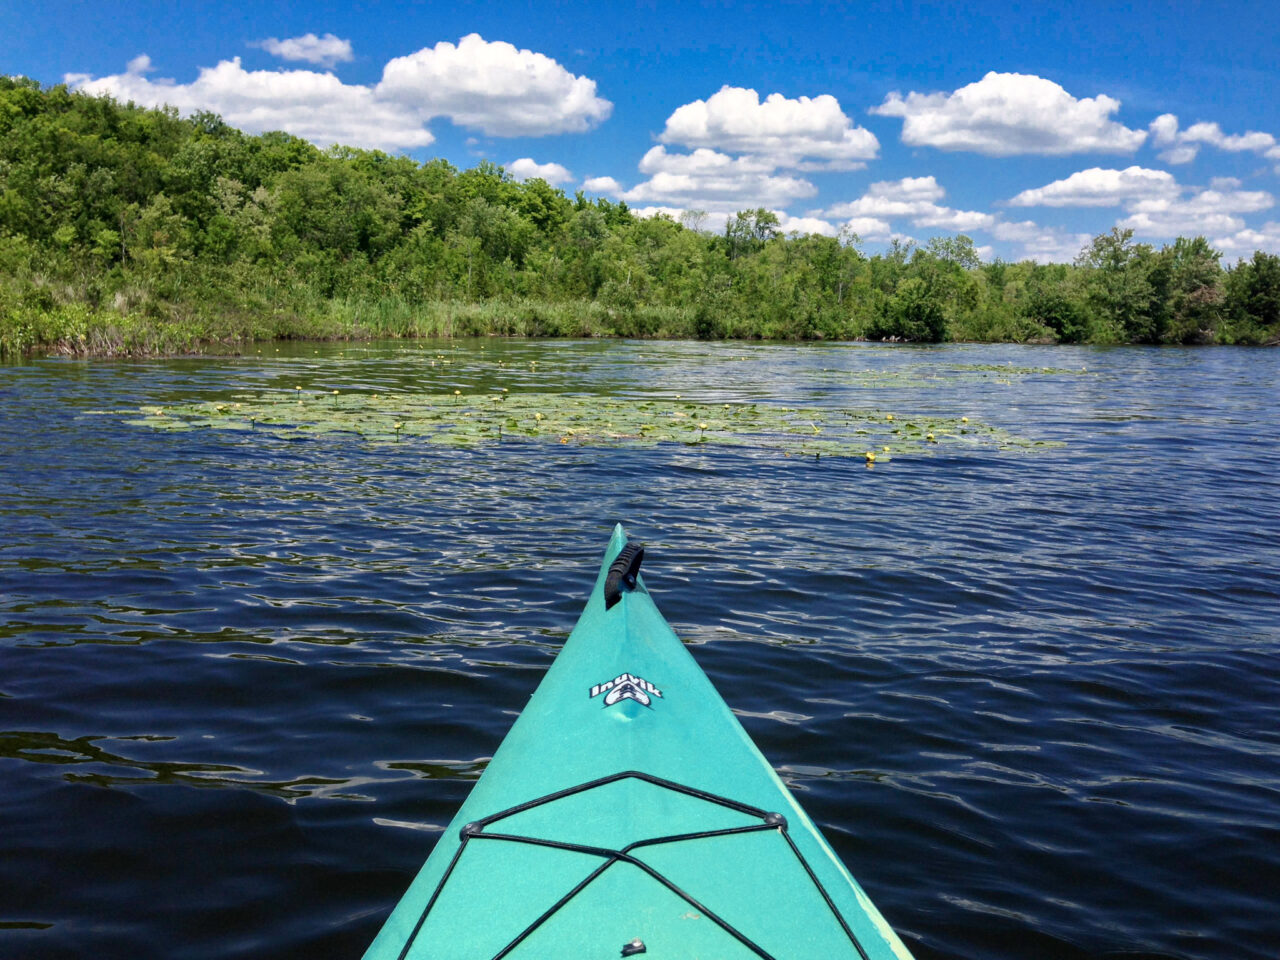 Tip of a kayak on a lake